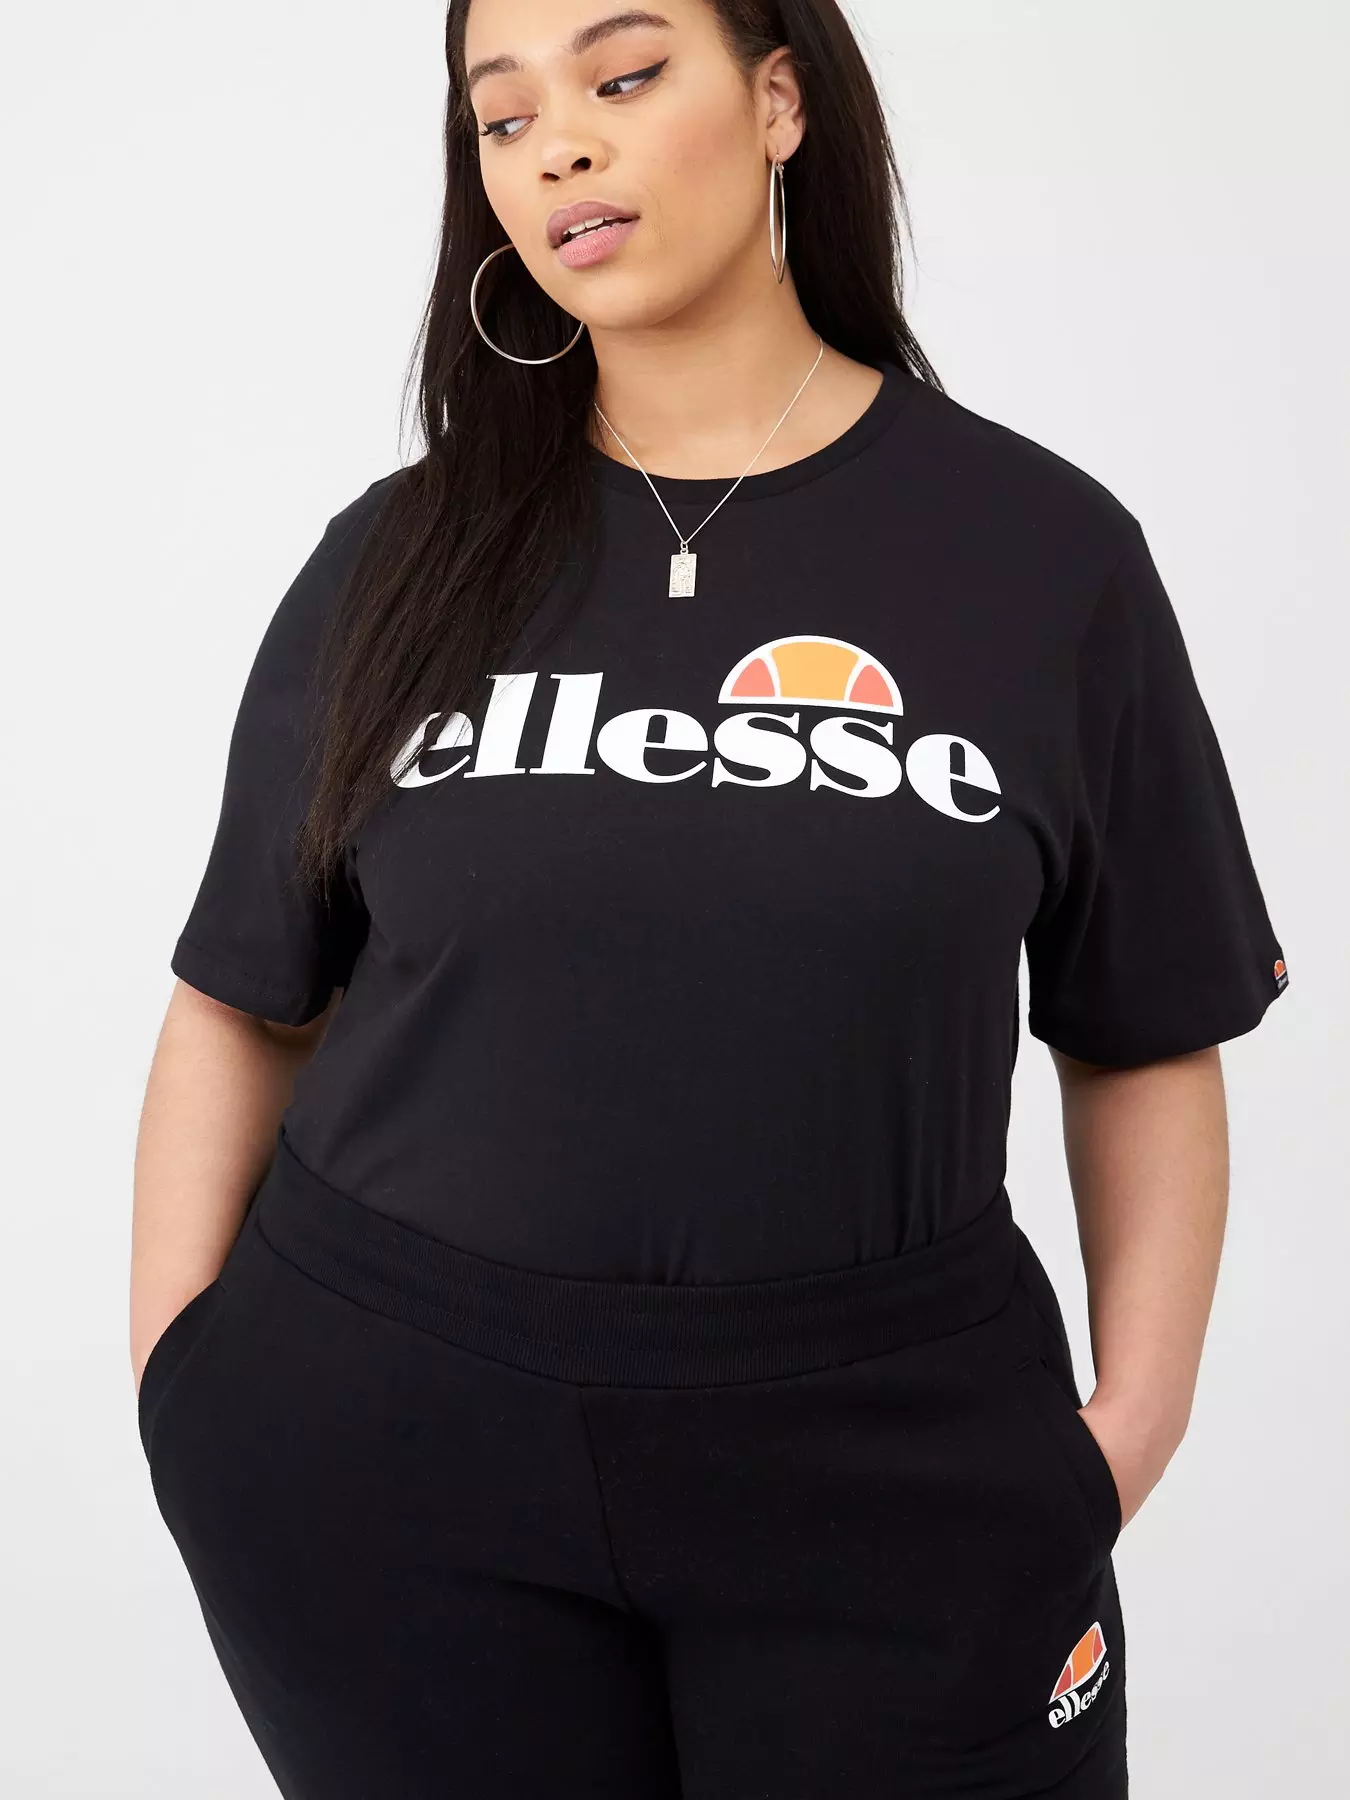 Ellesse Women's Clothing, Clothes for Women